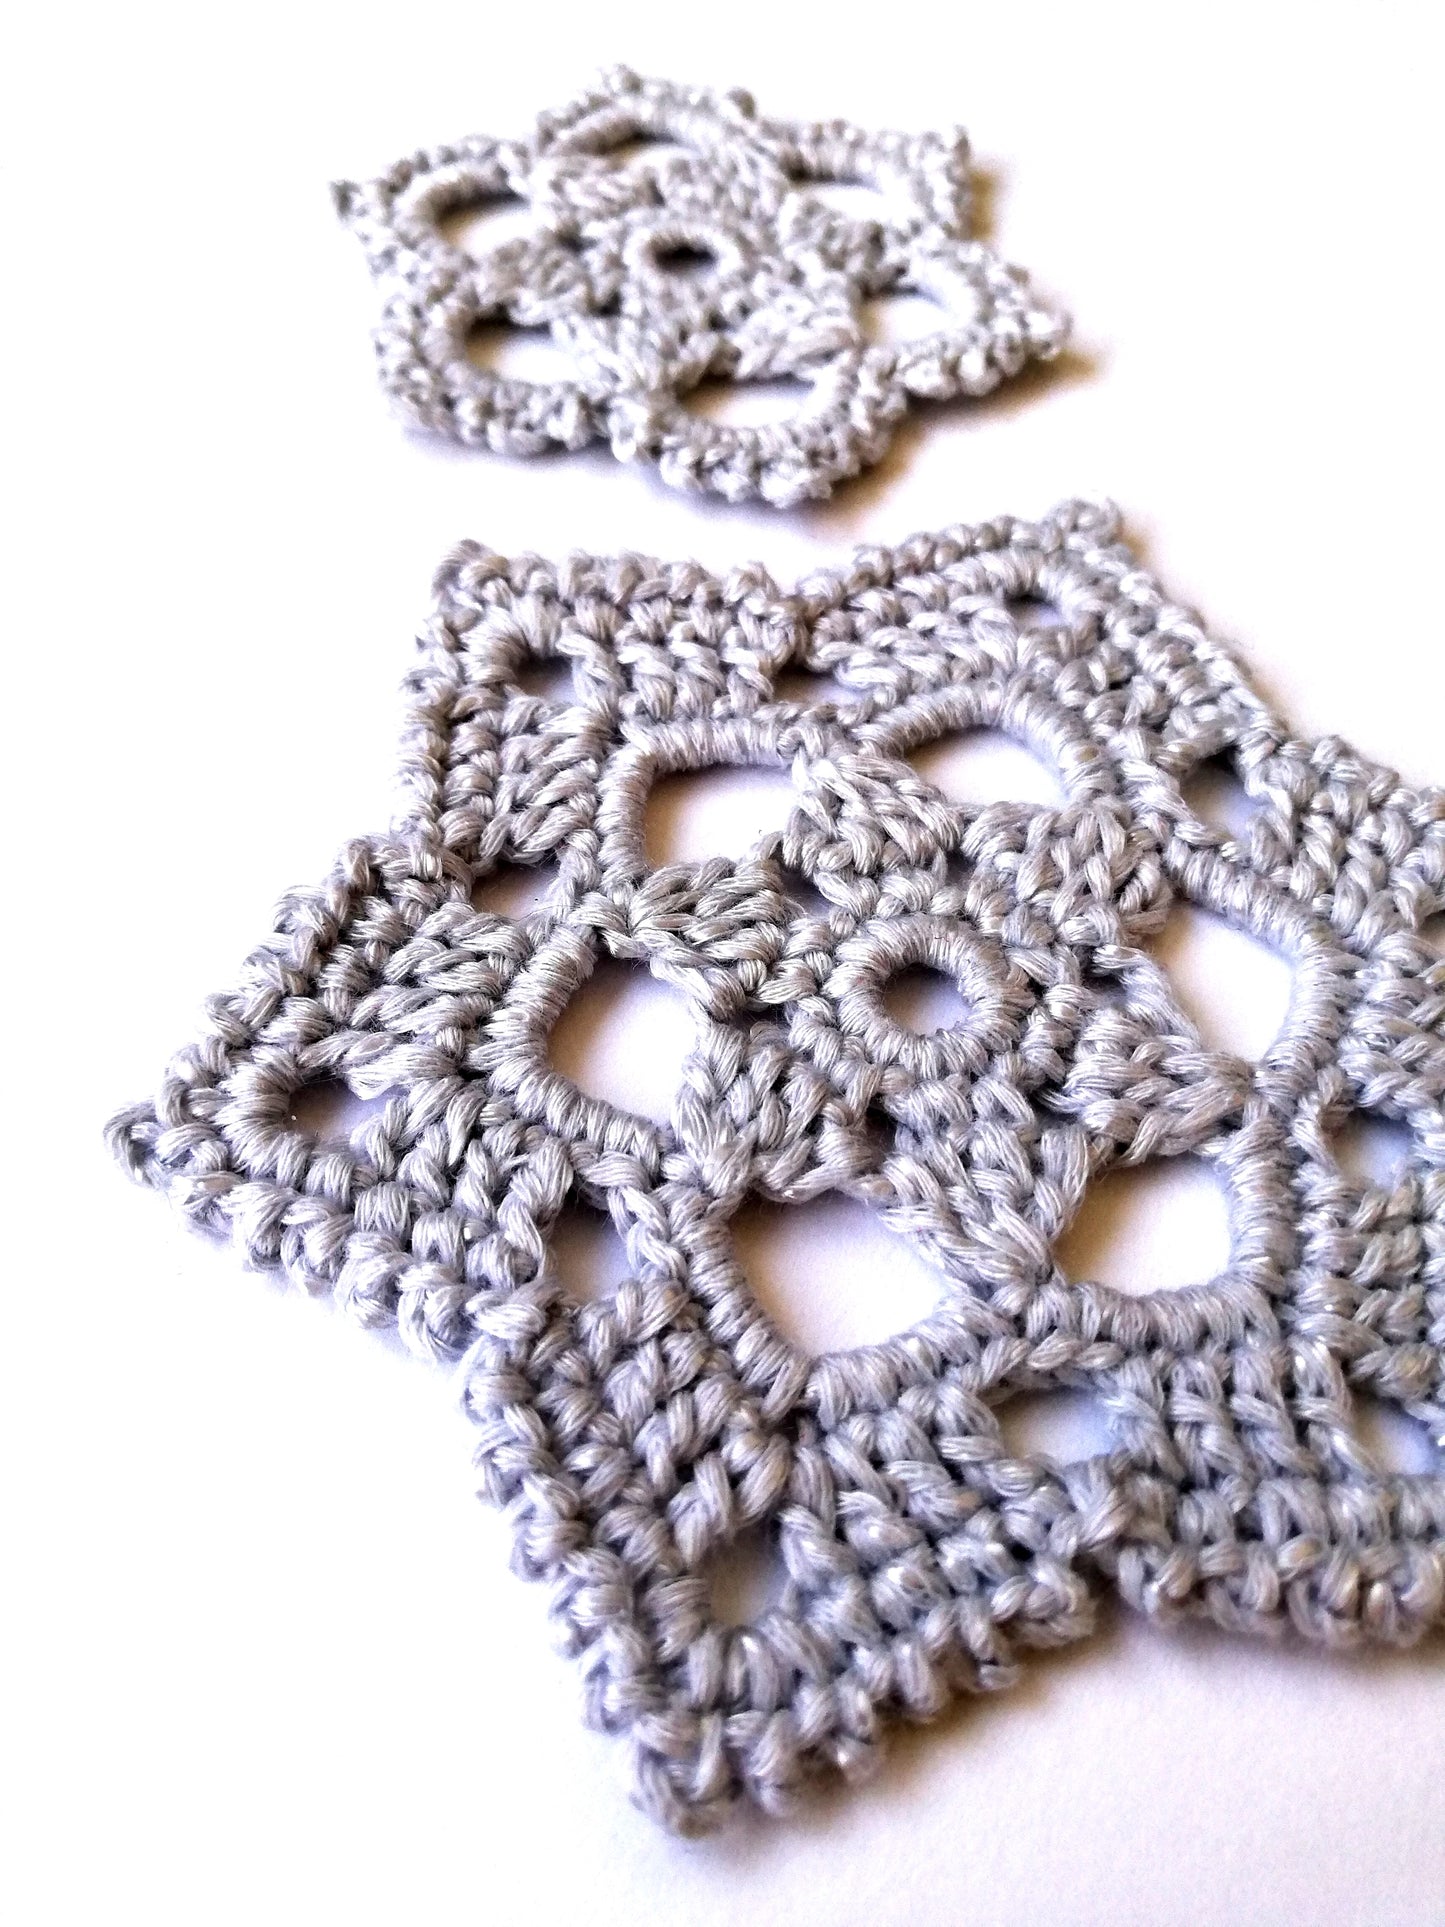 Crochet pattern: snowflakes 2